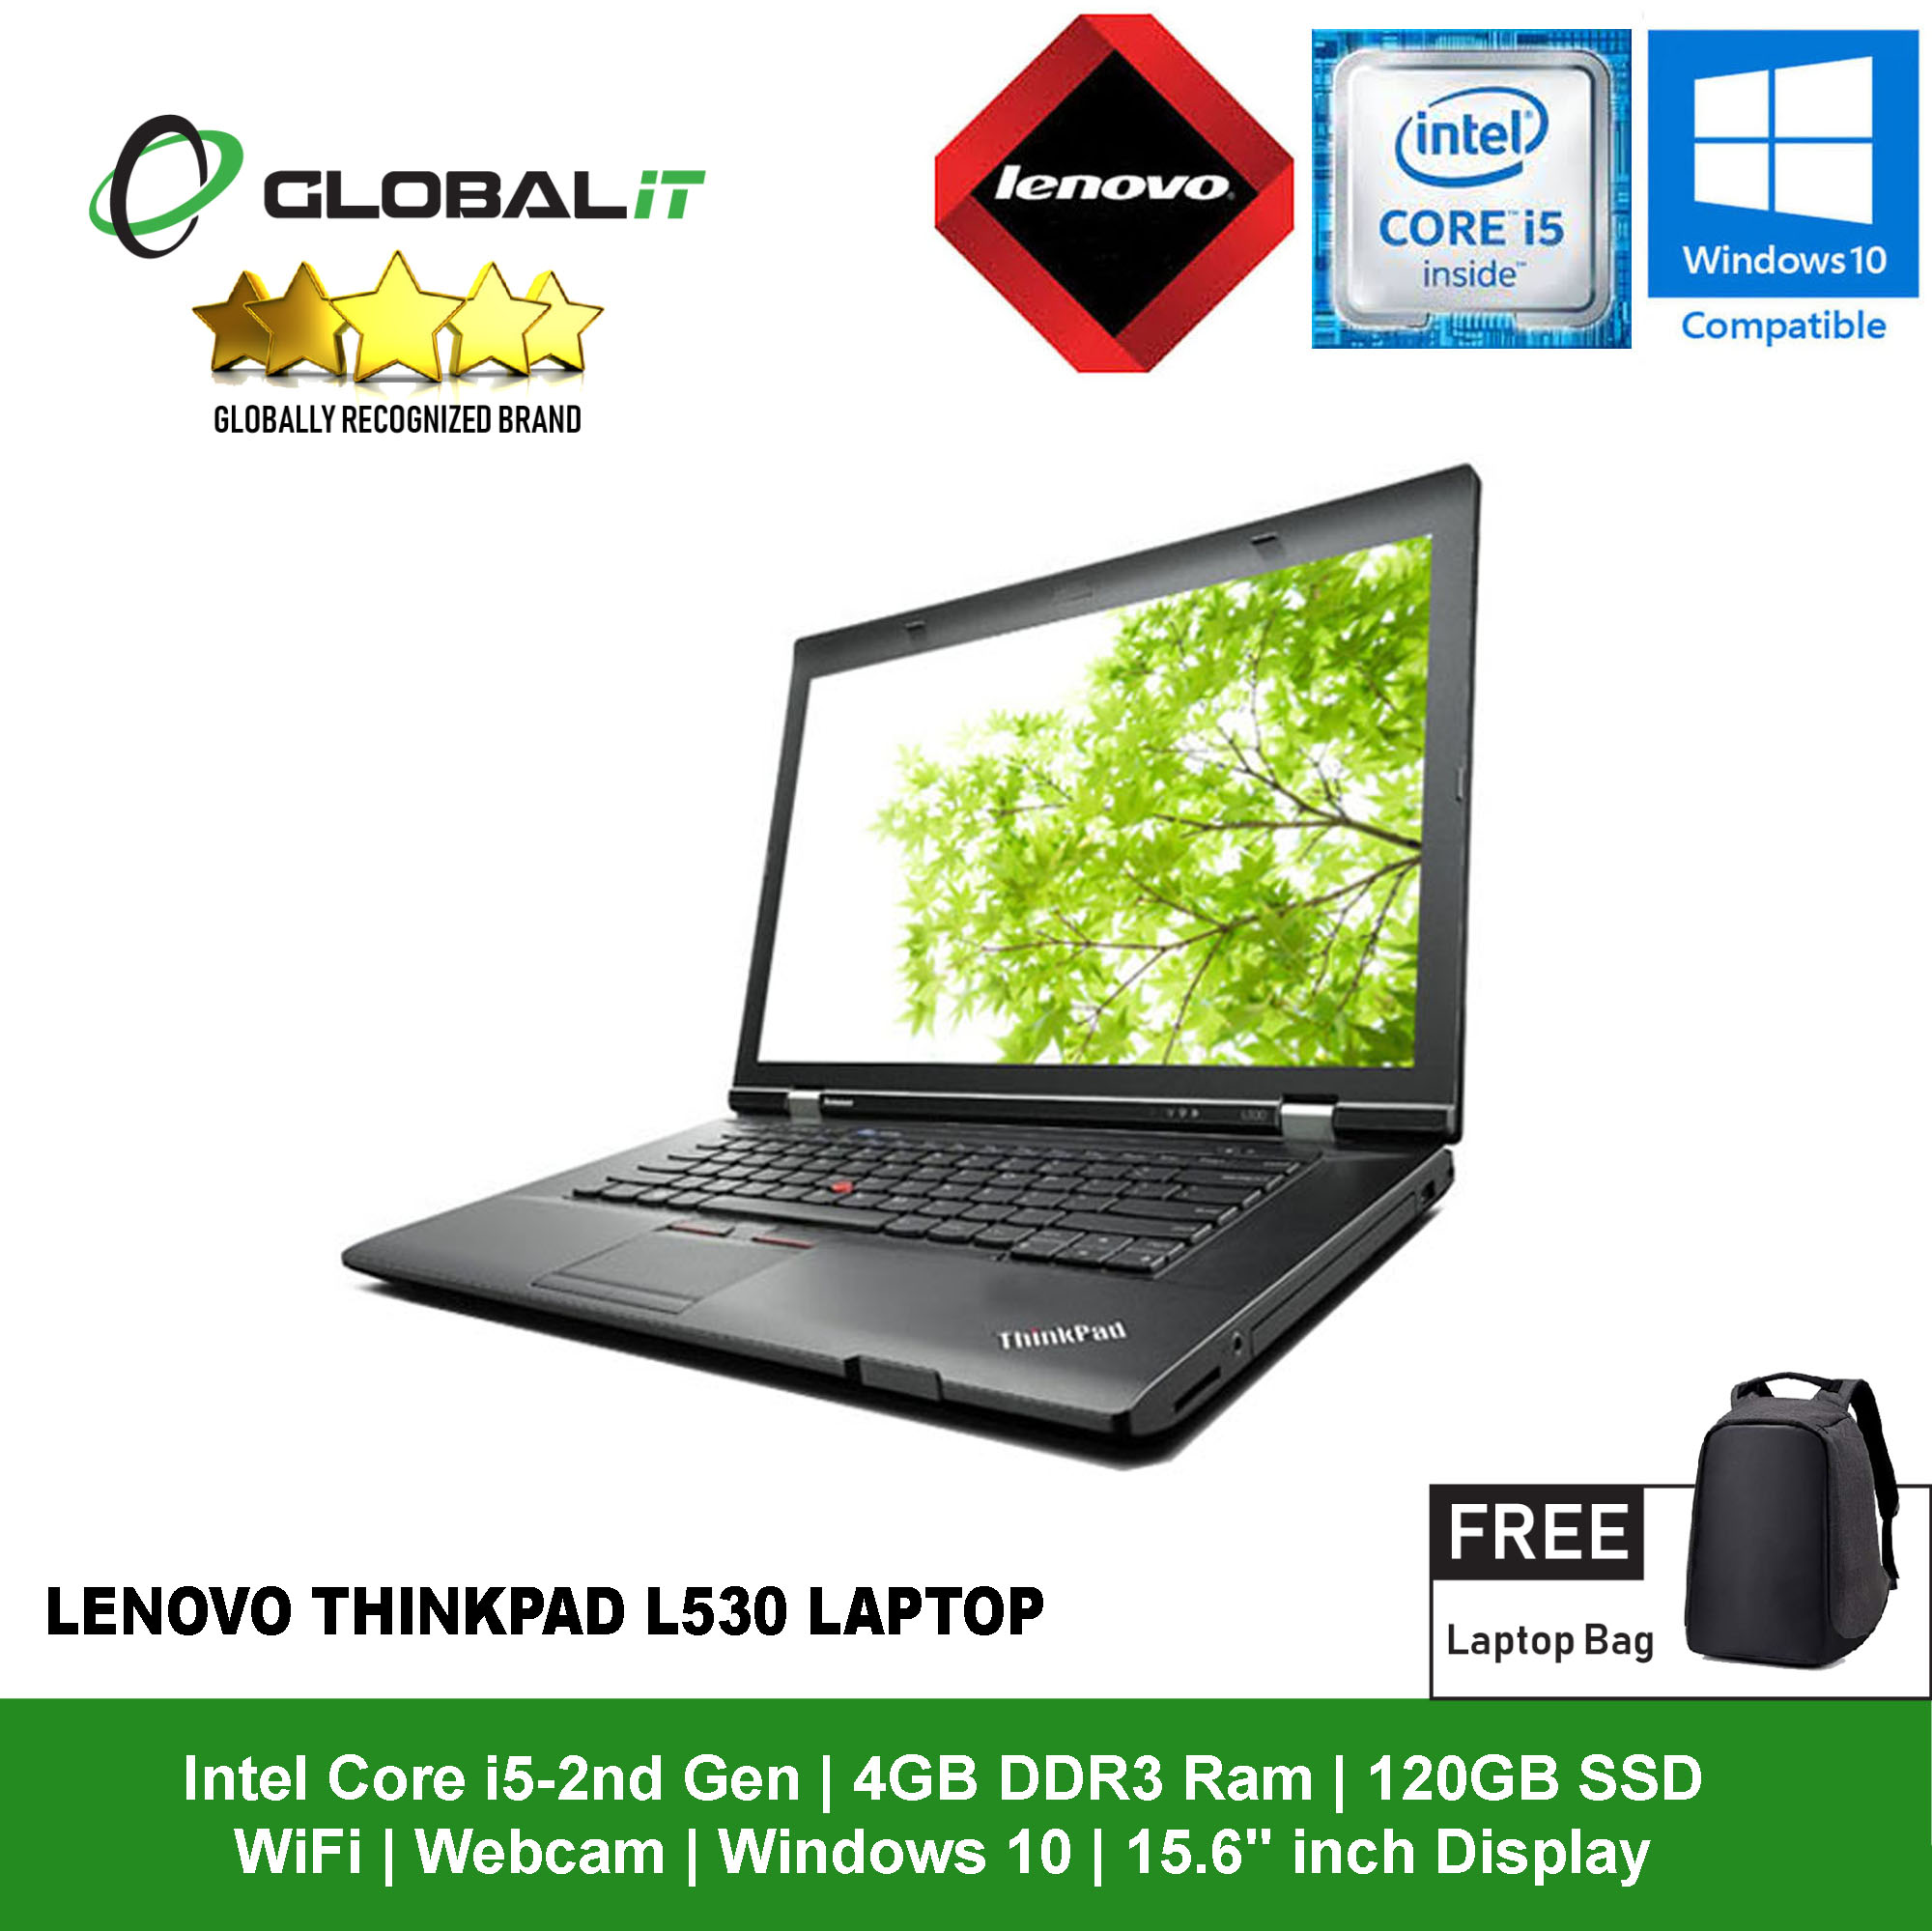 Lenovo Thinkpad L530 Laptop Intel Core i5-2nd Gen 15.6